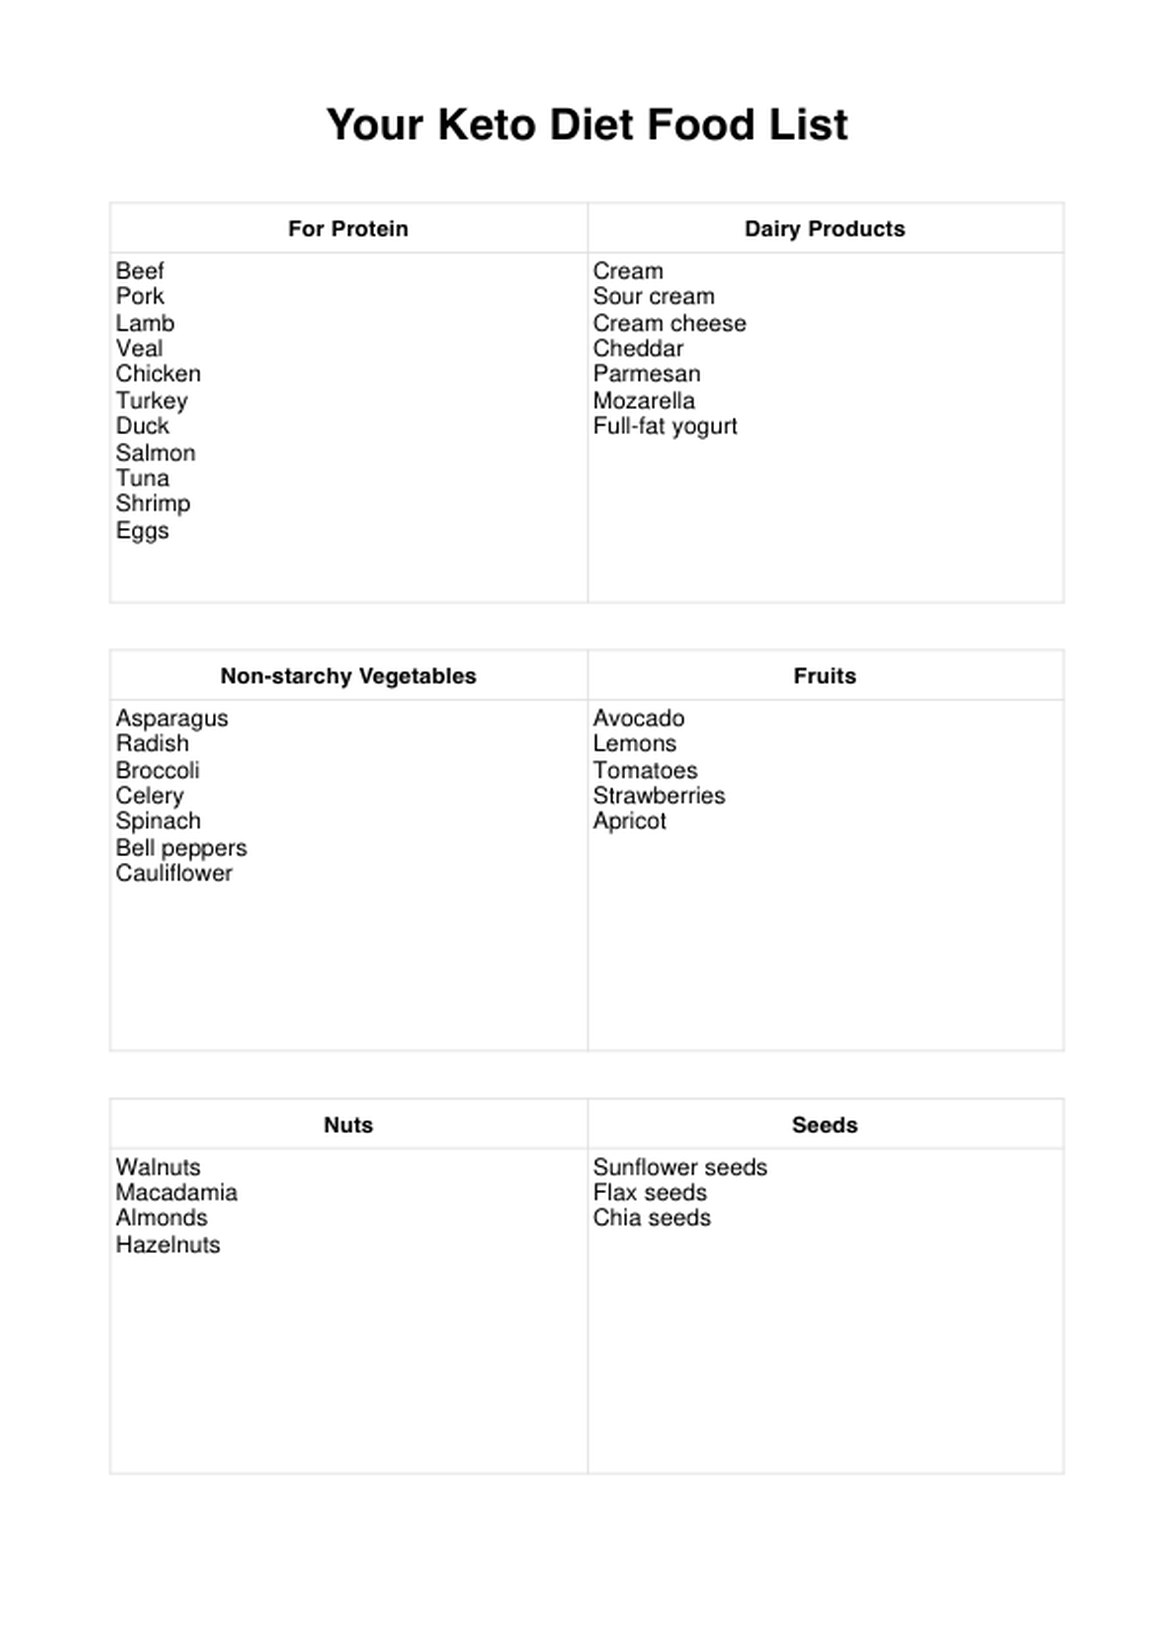 Keto Diet Food List PDF Example